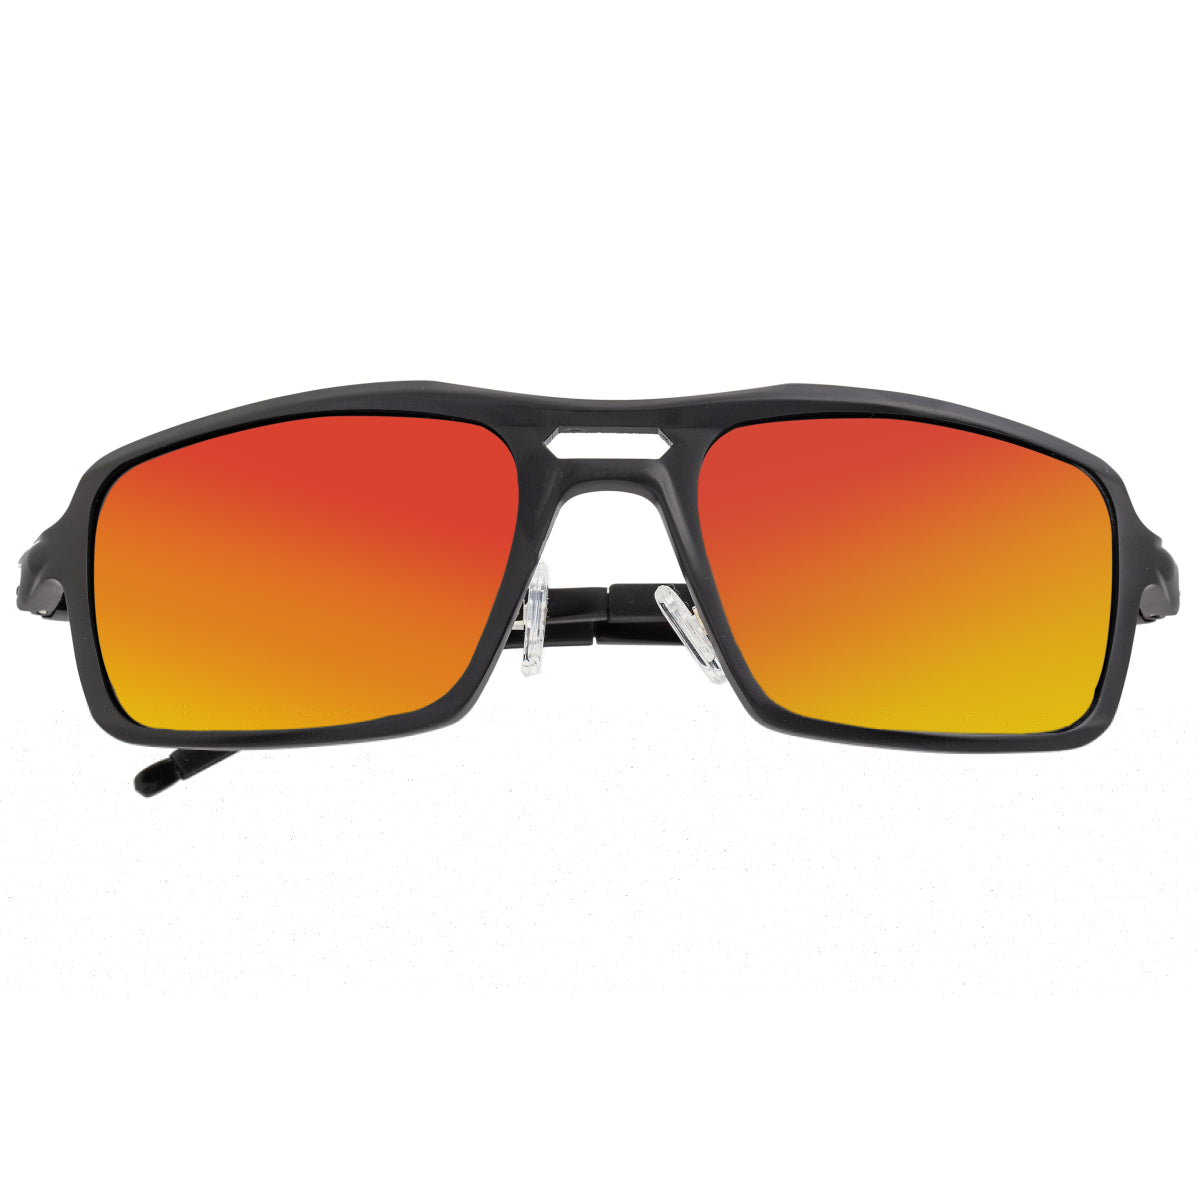 Breed Orpheus Aluminum Polarized Sunglasses - Black/Red-Yellow - BSG062RD